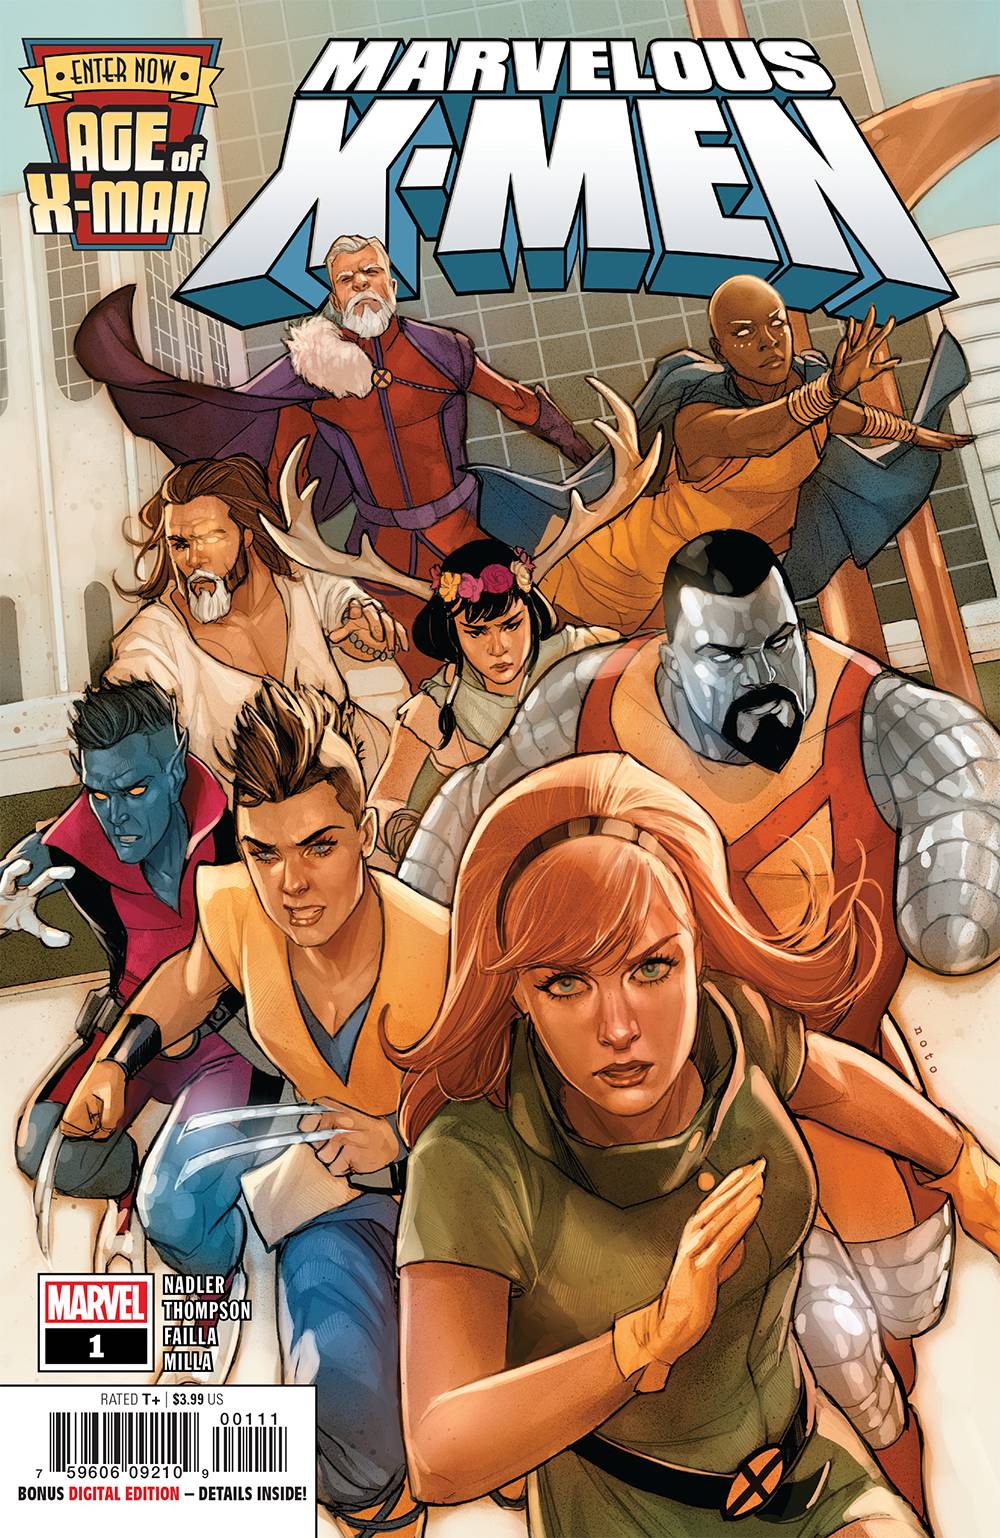 Age of X-Man: The Marvelous X-Men 1 Comic Book